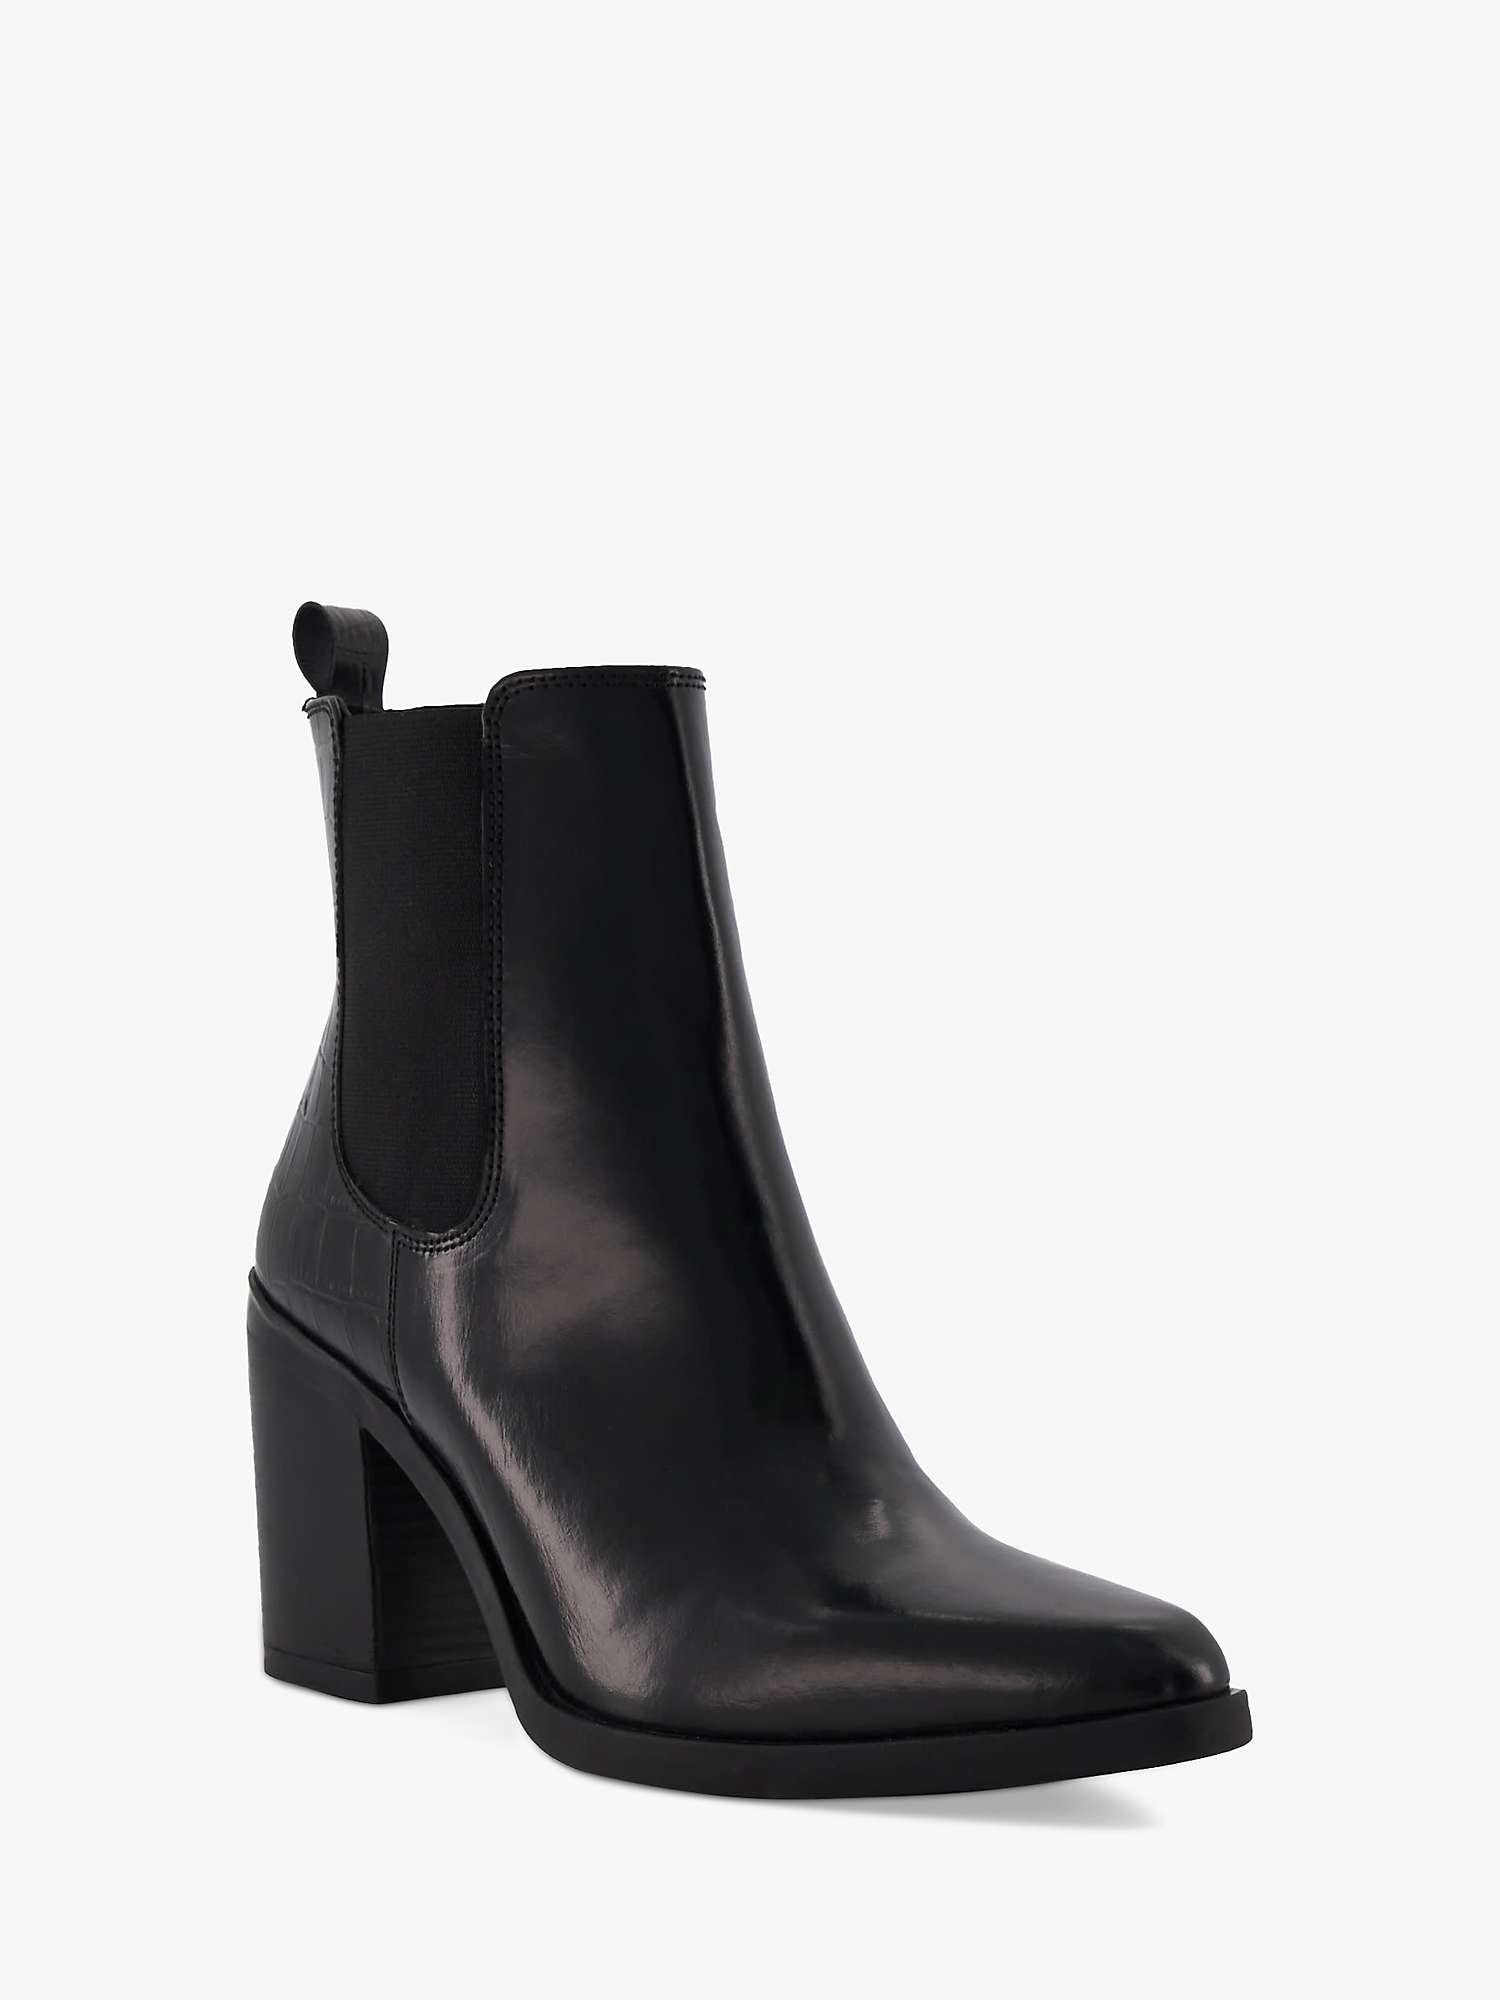 Buy Dune Promising Block Heel Leather Ankle Boots, Black Online at johnlewis.com